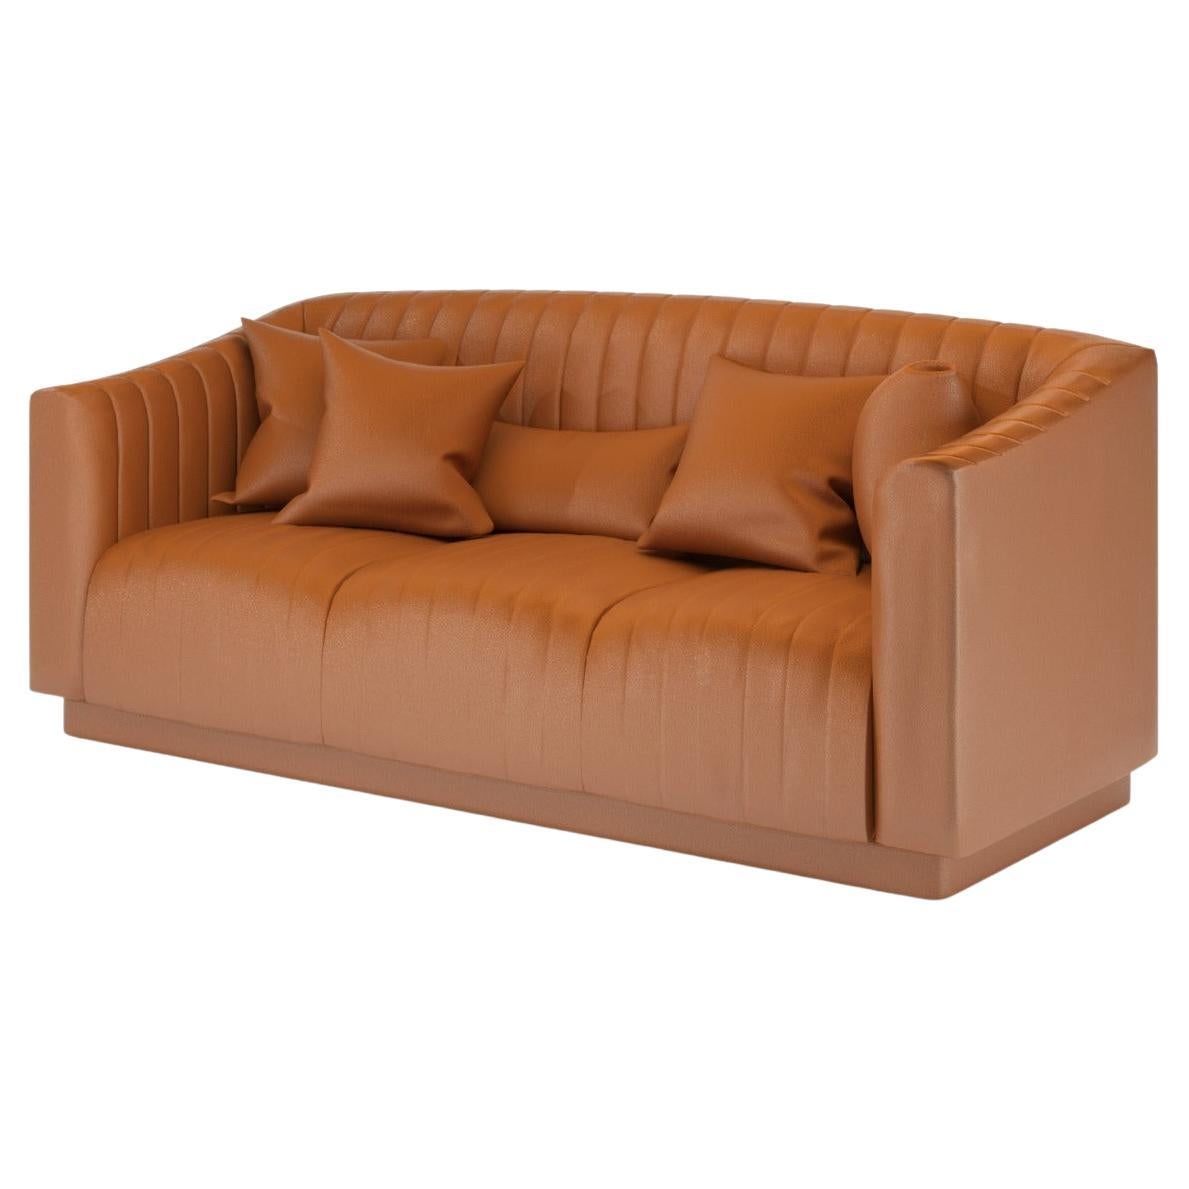 Canapé moderne en cuir marron Uphostery en vente